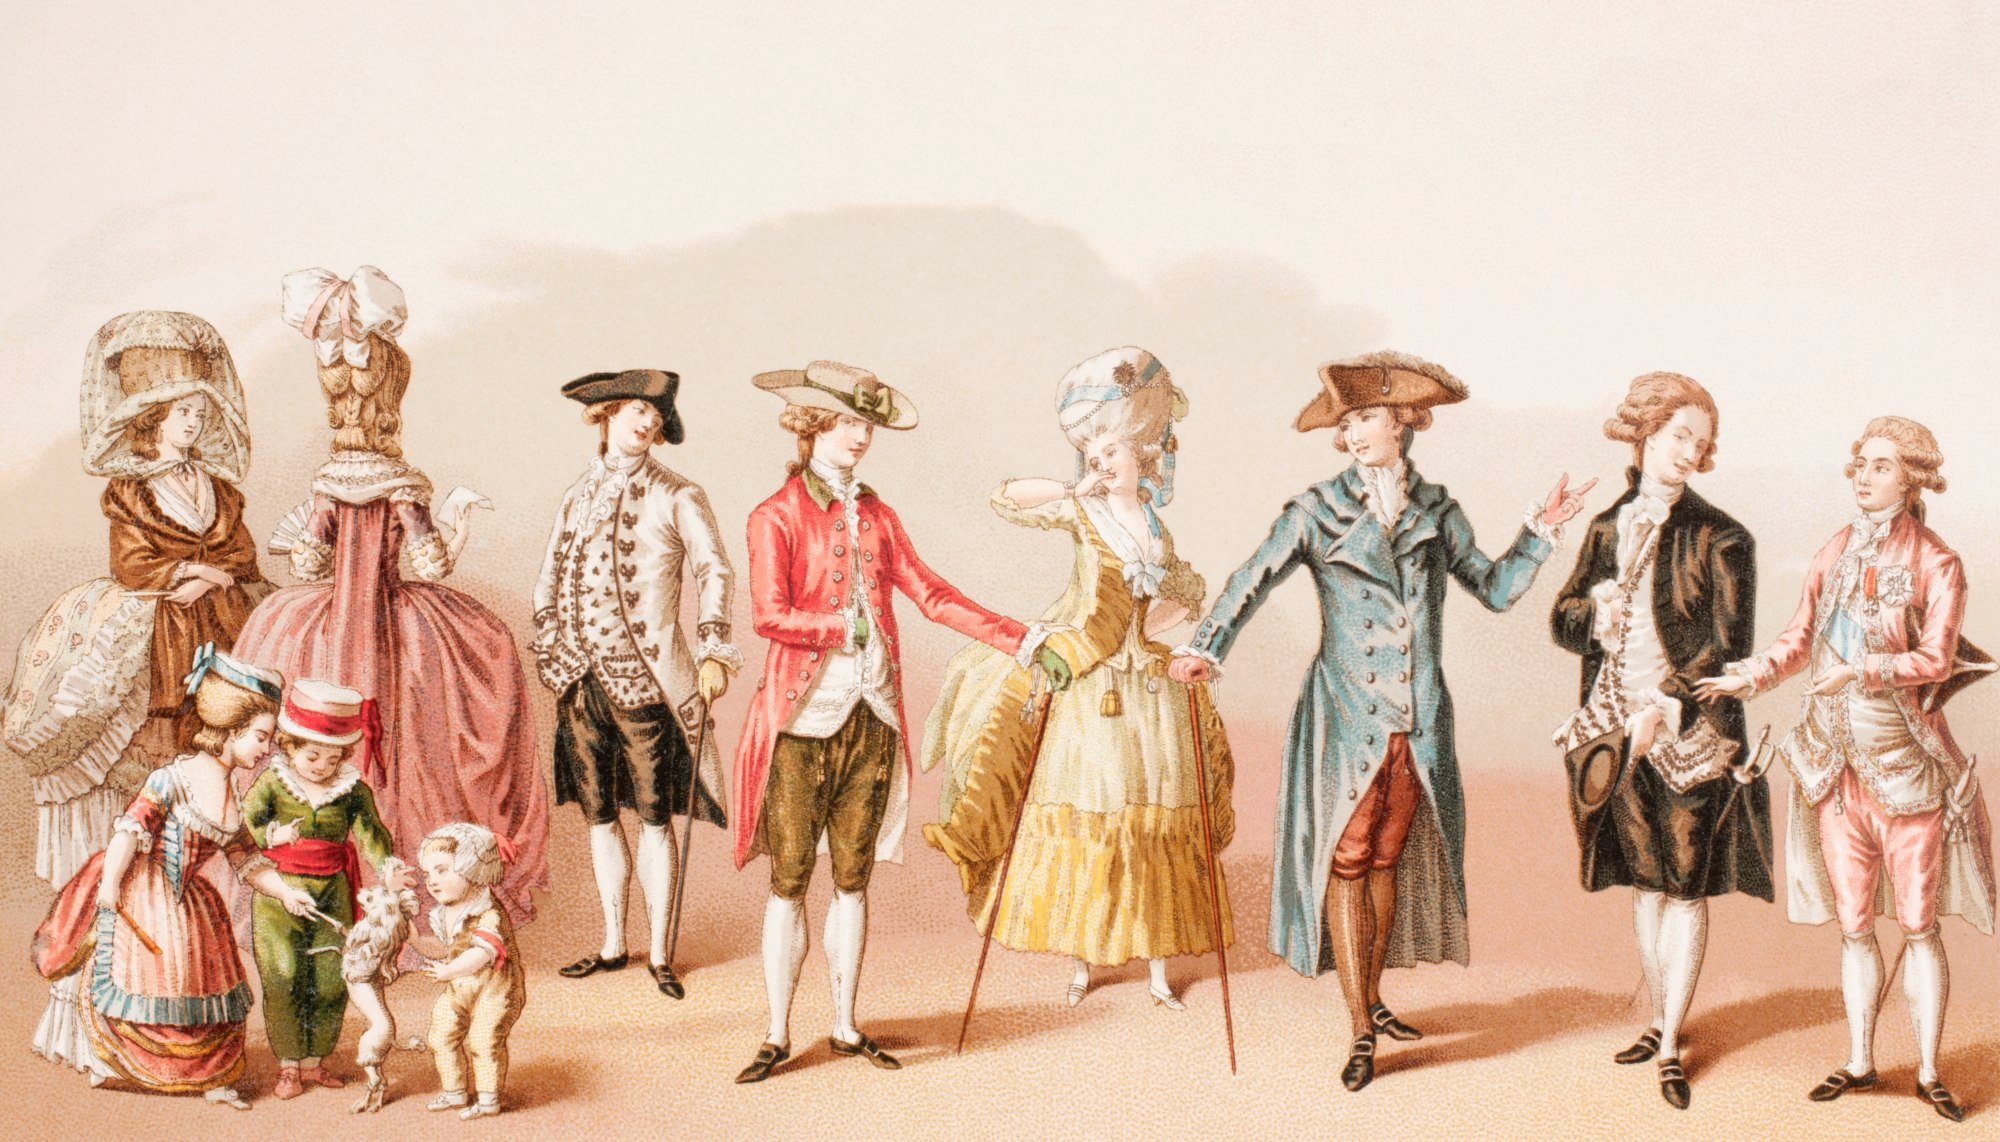 Дворянство франции. Дворянство Франция одежда 18 век. Дворянство во Франции 18 век. Одежда французских дворян 18 века. Одежда дворянина Франция 18 век.